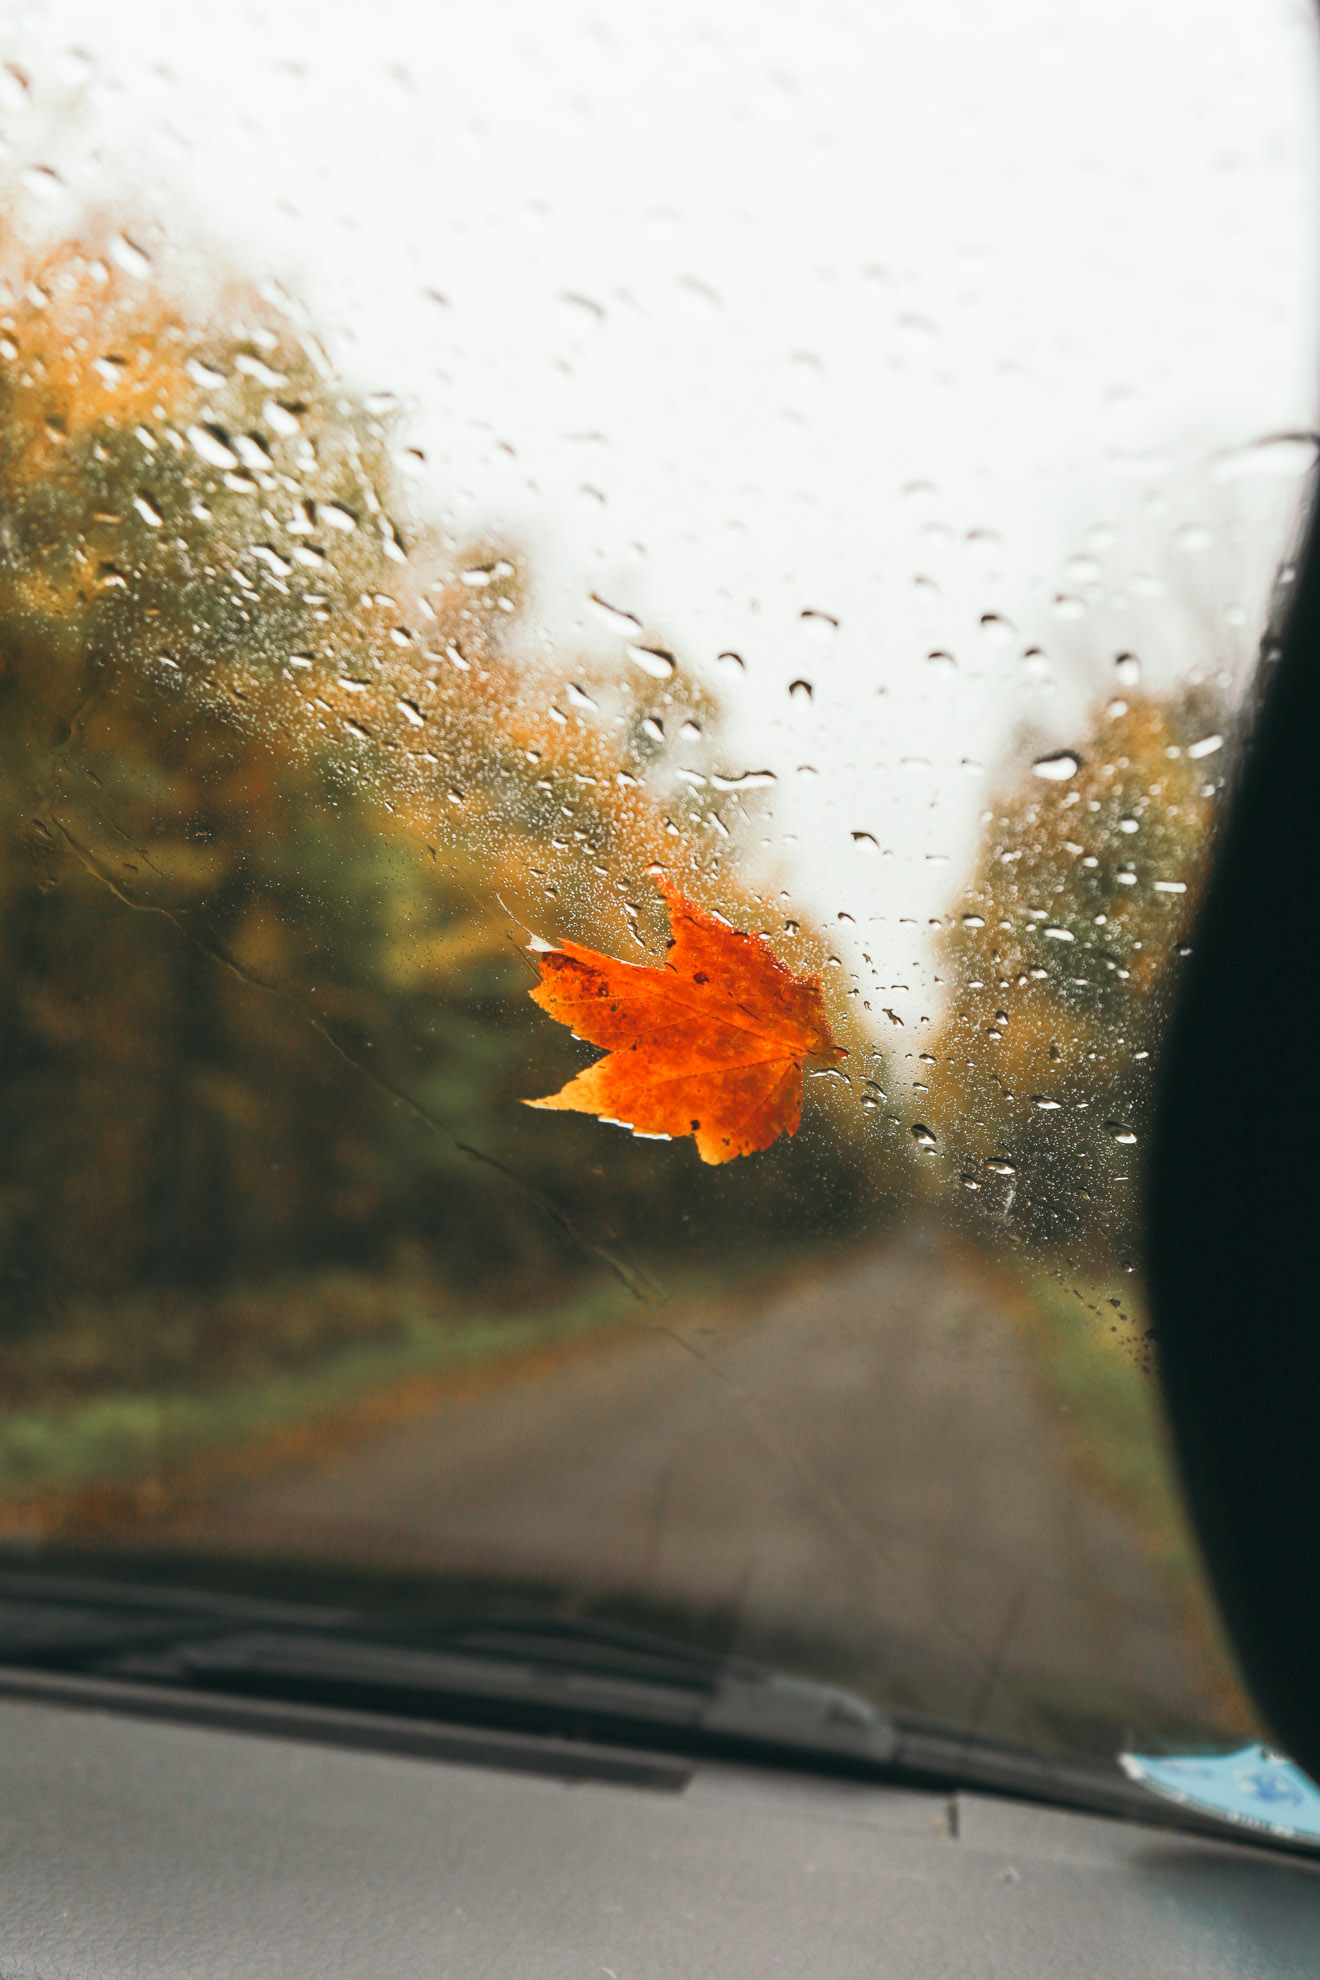 red orange leaf stuck in car window